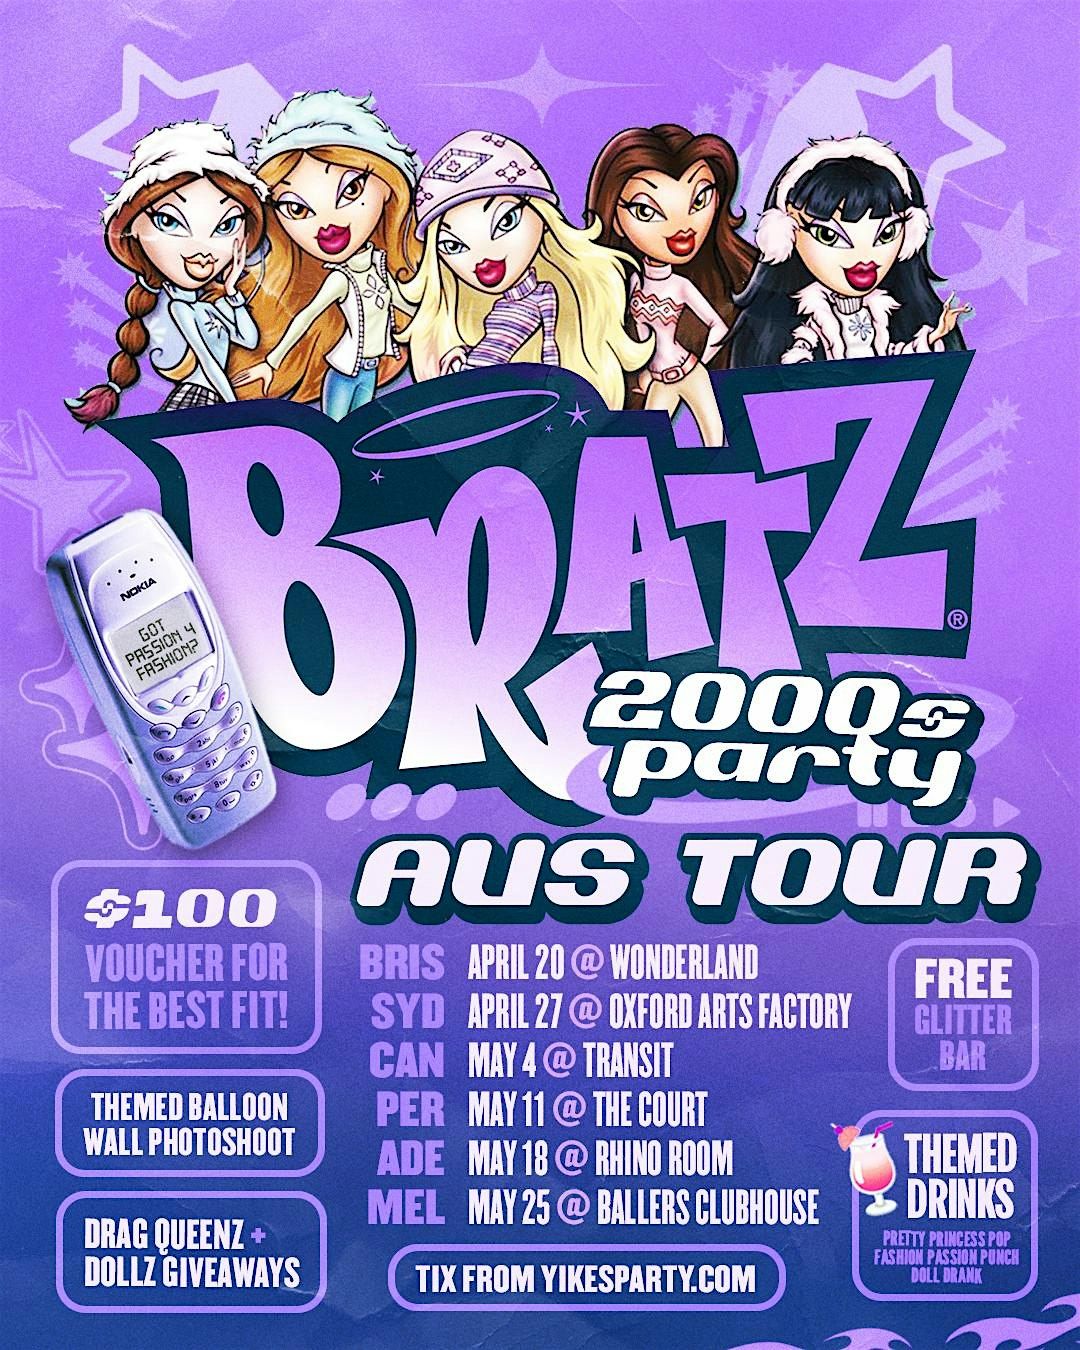 BRATZ 2000s Party Perth